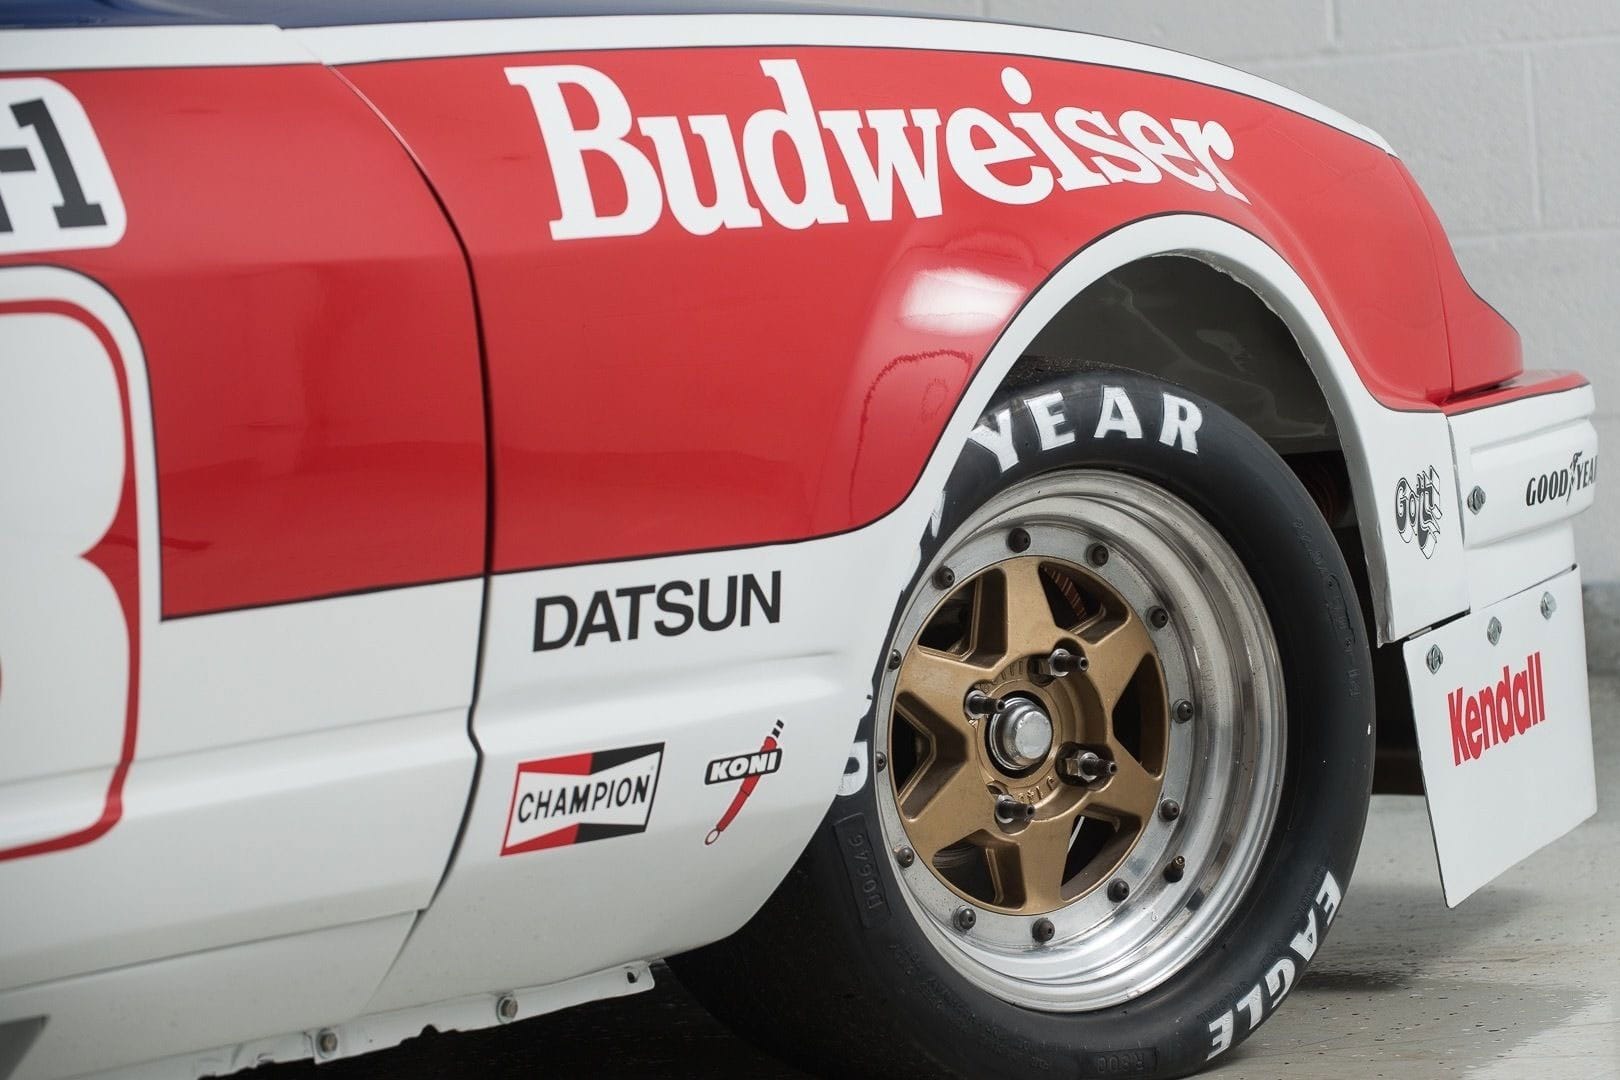 PLN Paul Newman Racing Sticker Datsun SCCA Vintage Sports Car Racing Decal 